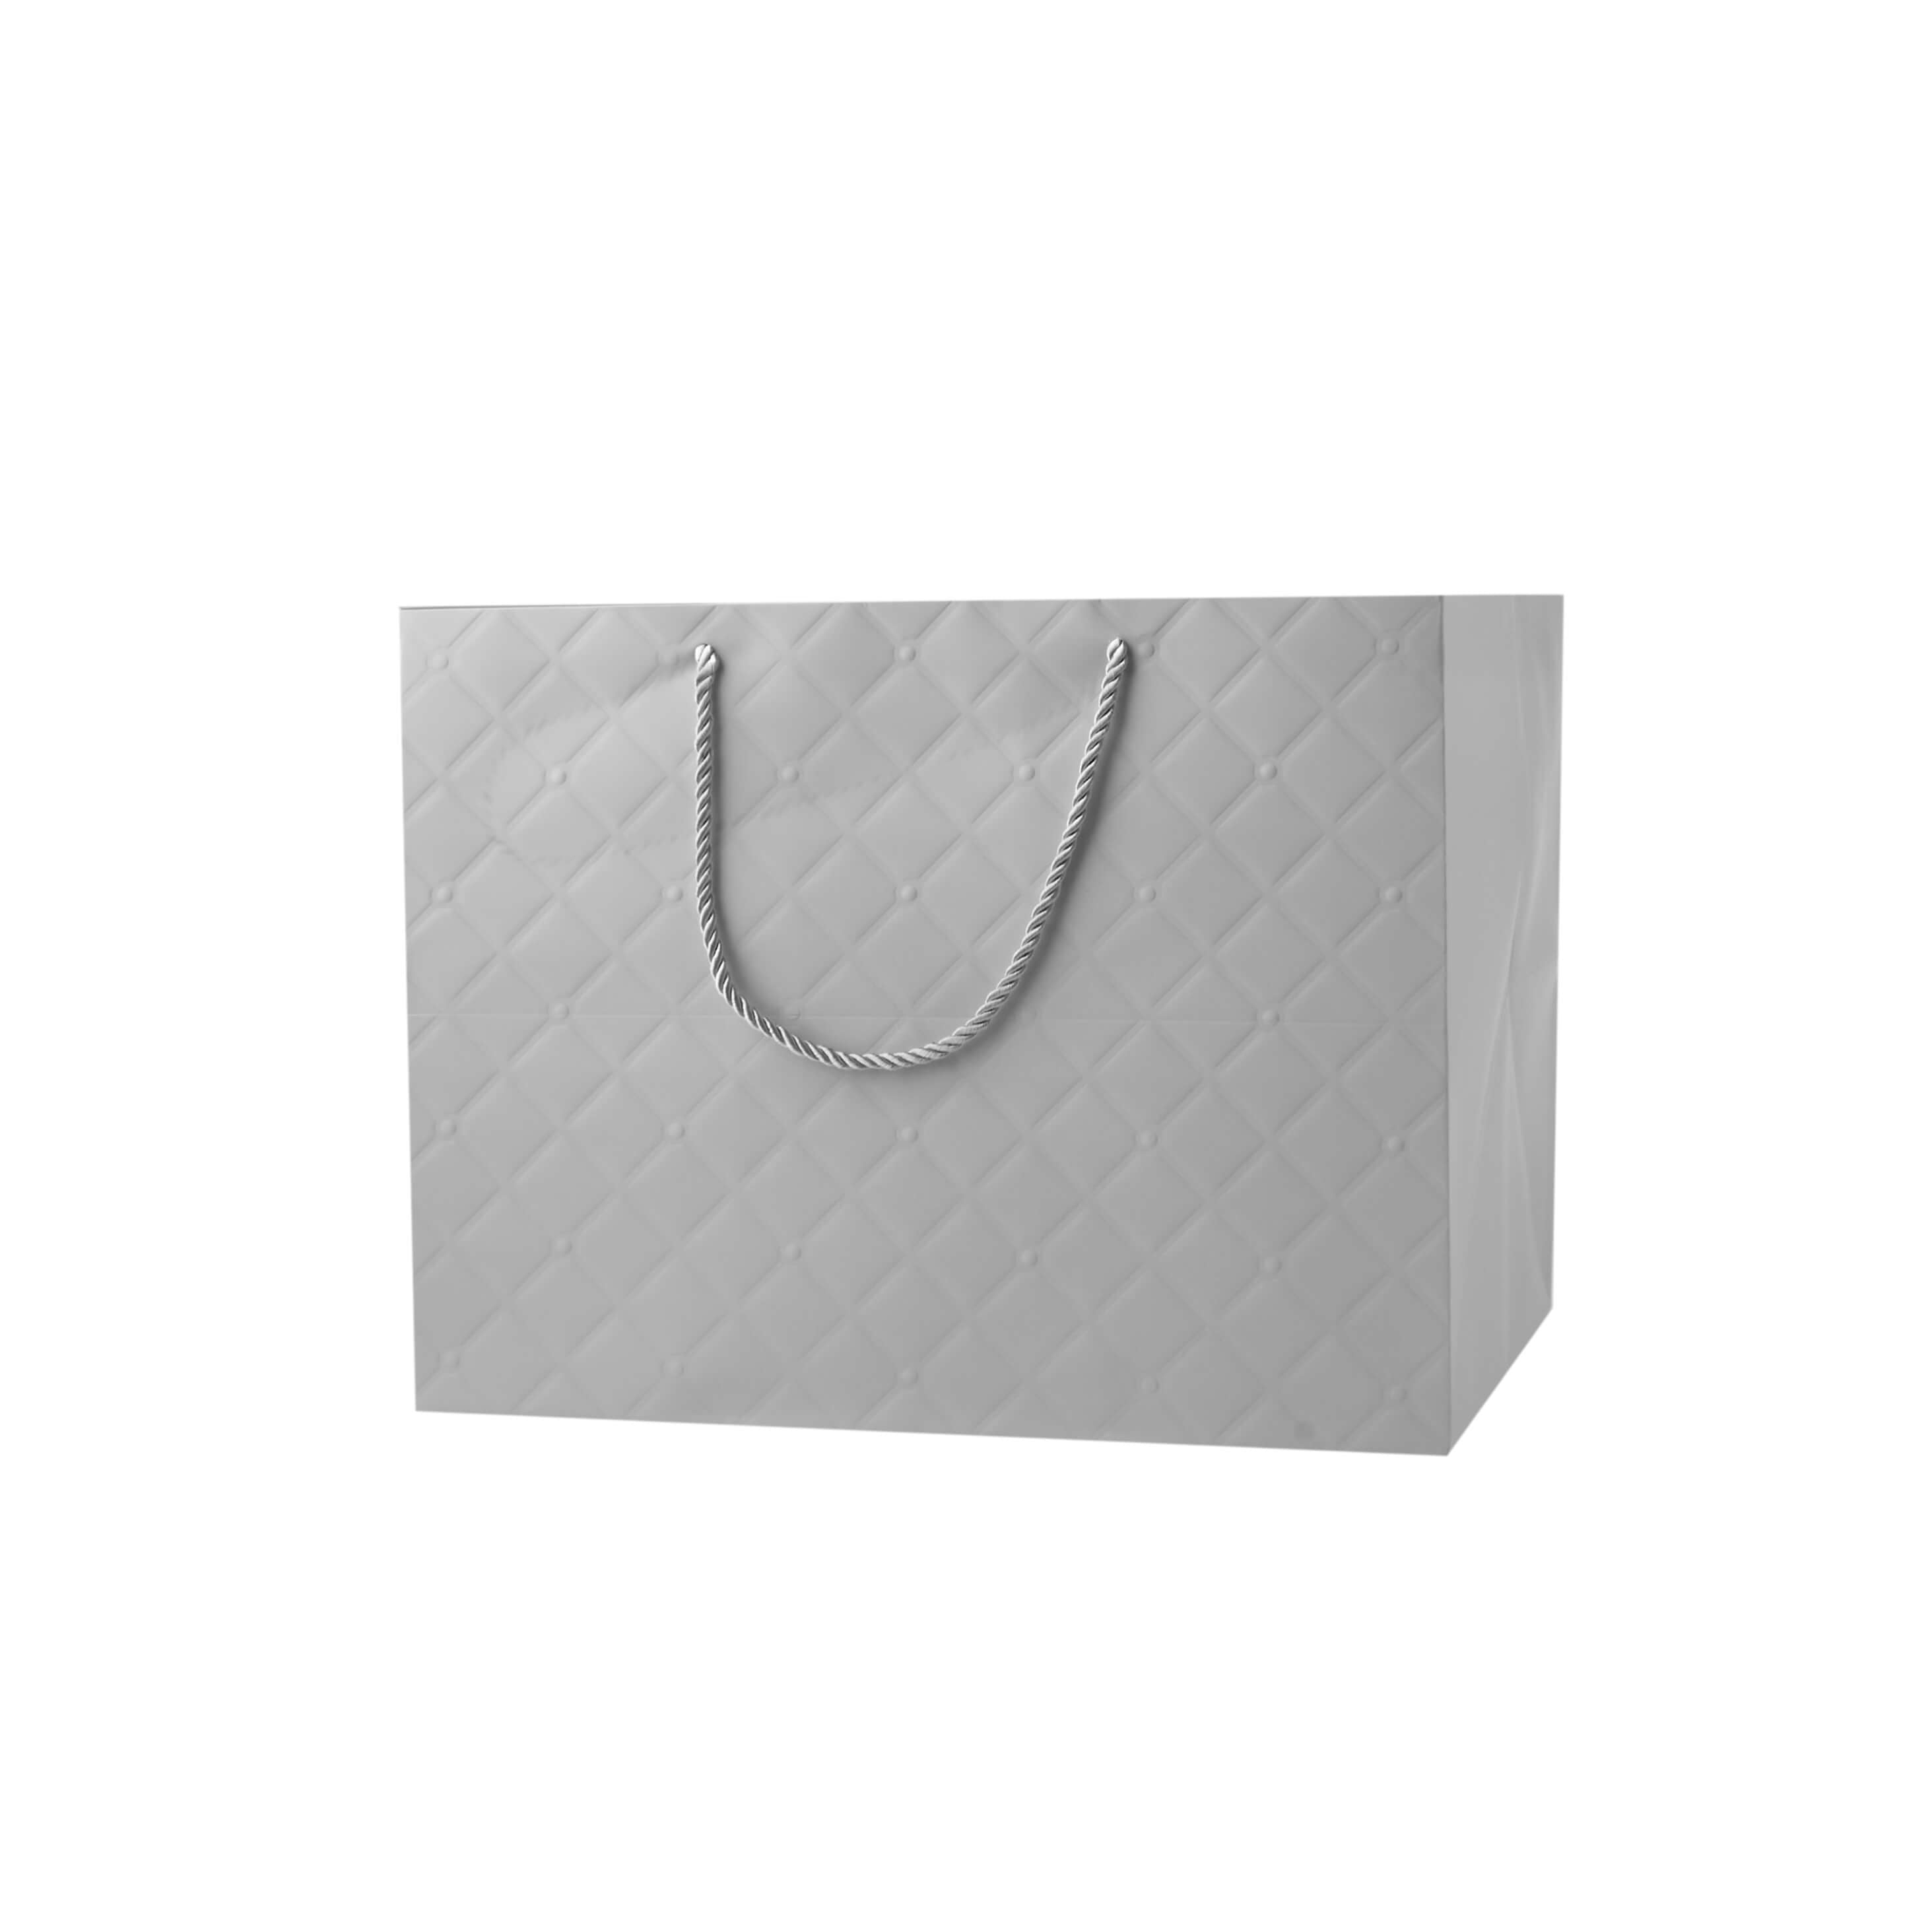 Pink & Black Duets Shoppings Bag Assortment  Retail shopping bags, Shopping  bag design, Online shop design